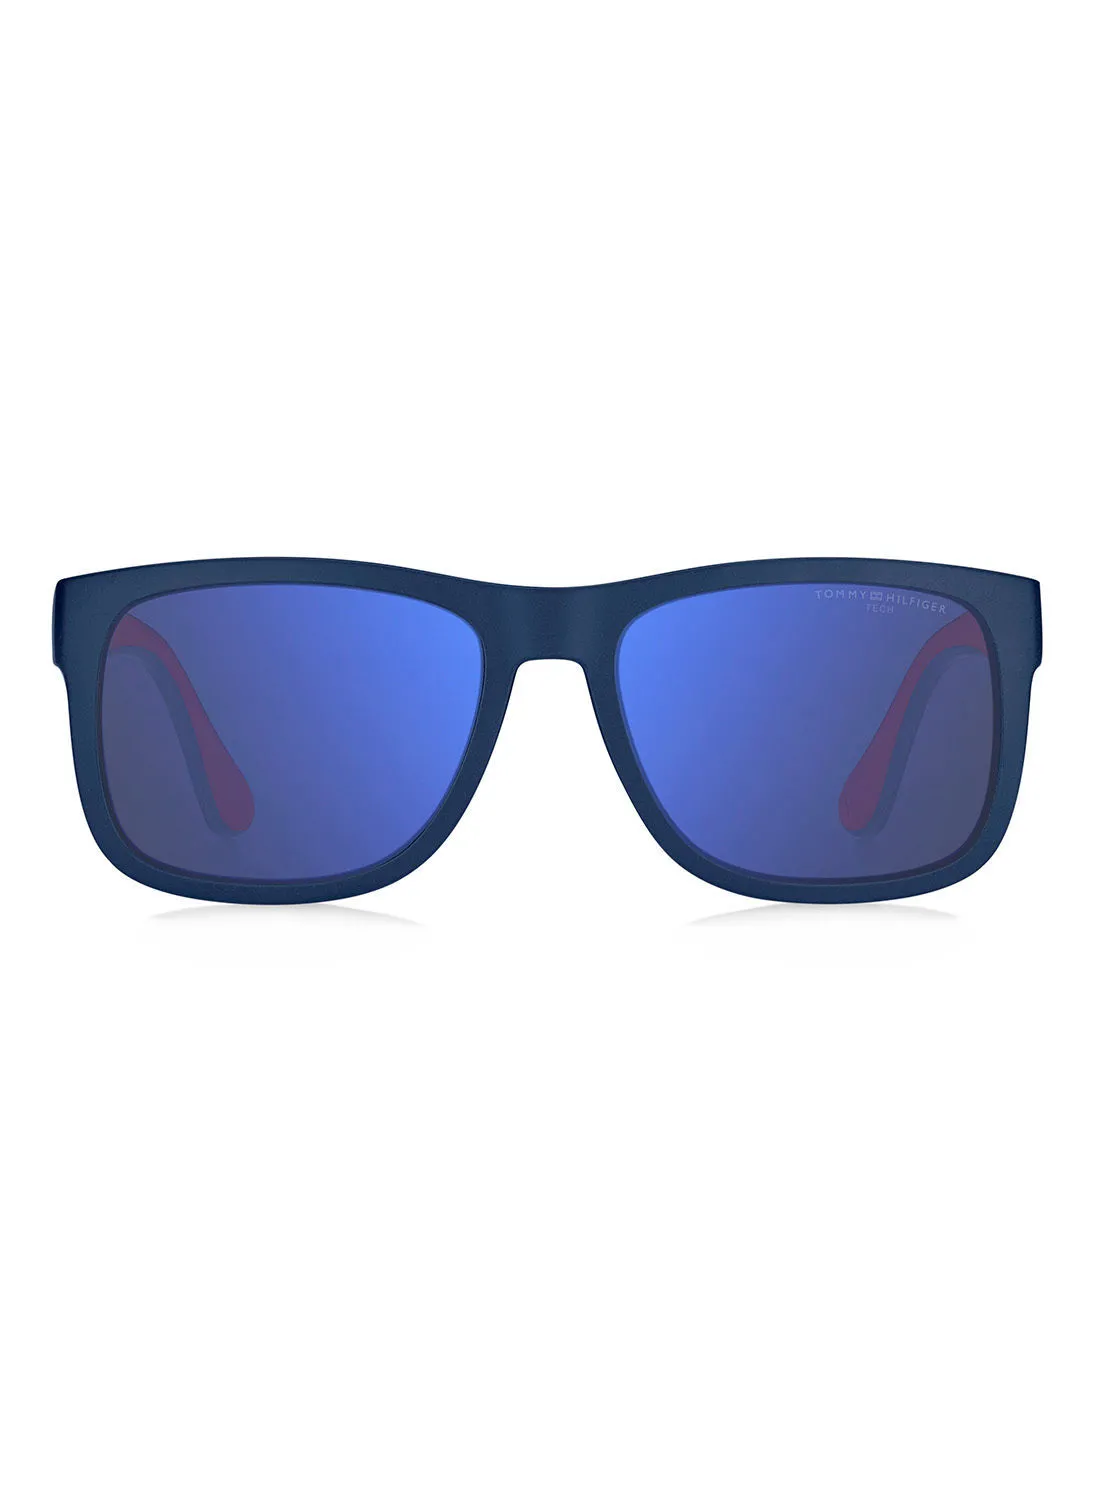 TOMMY HILFIGER Rectangular / Square  Sunglasses TH 1556/S MTT BLUE 56